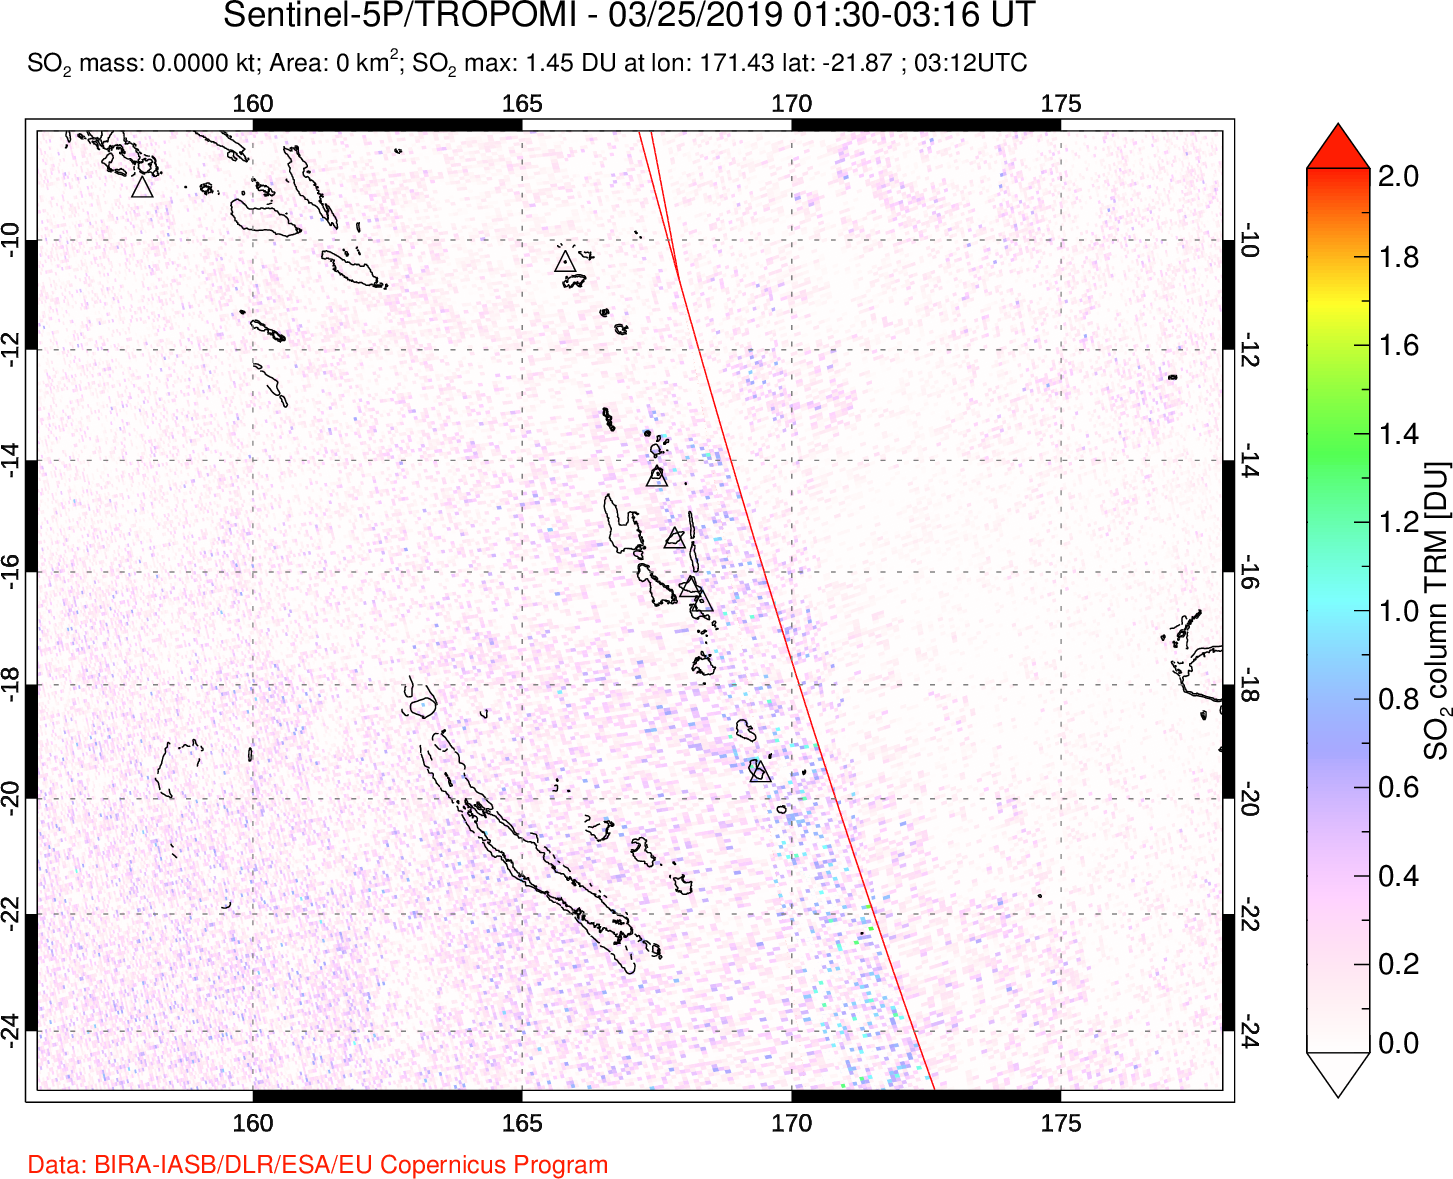 A sulfur dioxide image over Vanuatu, South Pacific on Mar 25, 2019.